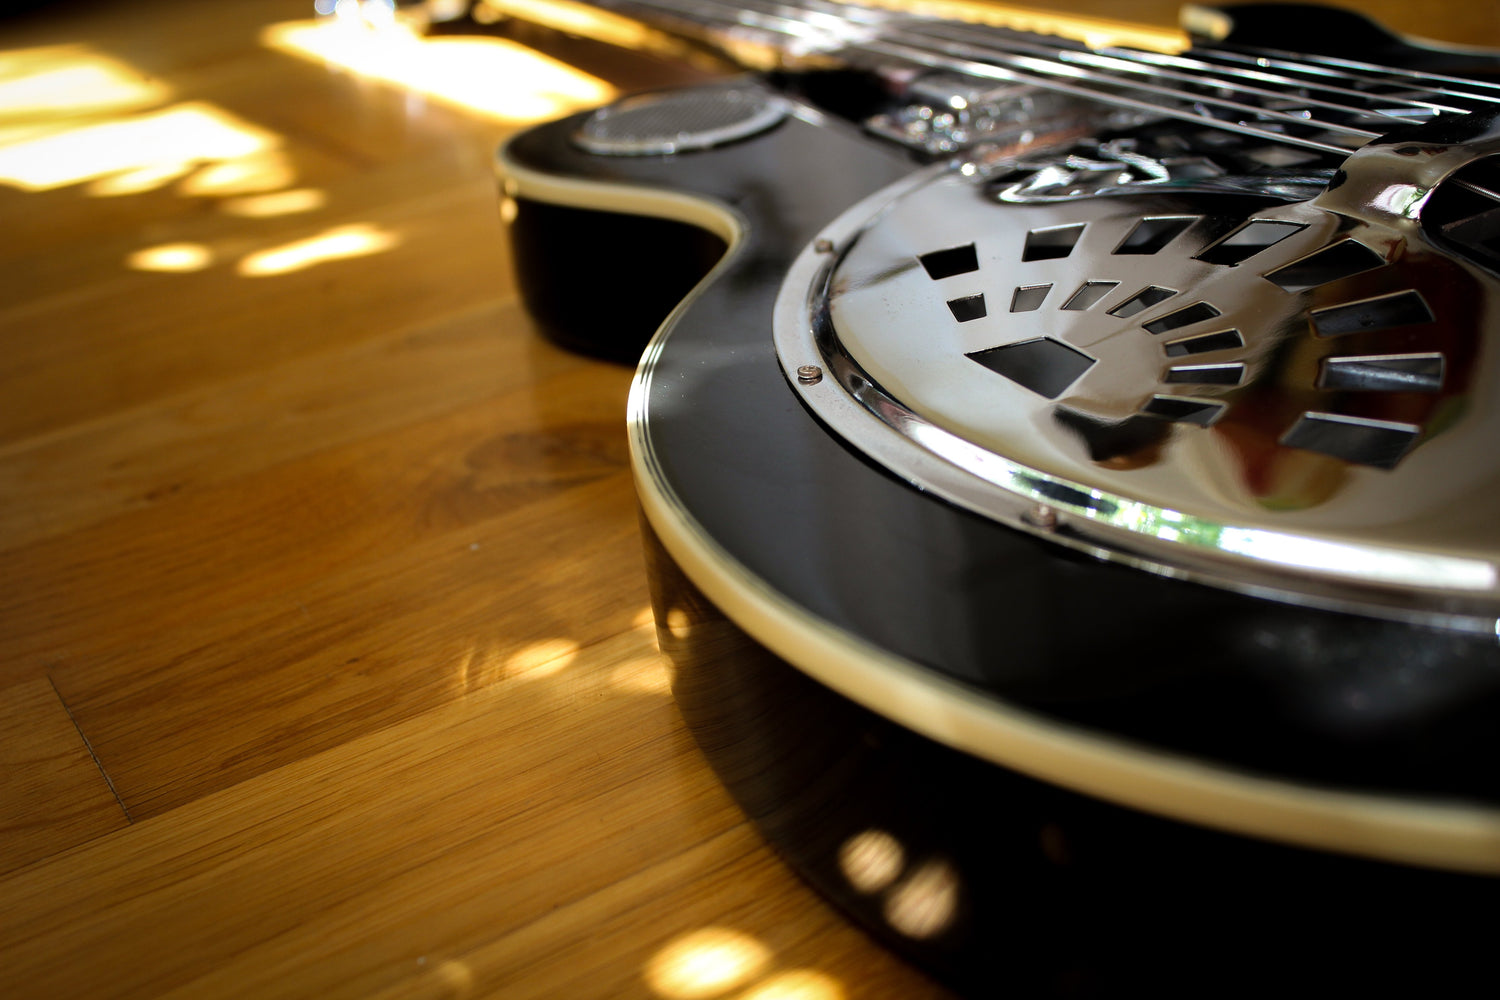 Phillips Design Masterpiece black guitar reflects sunlight onto wooden floor